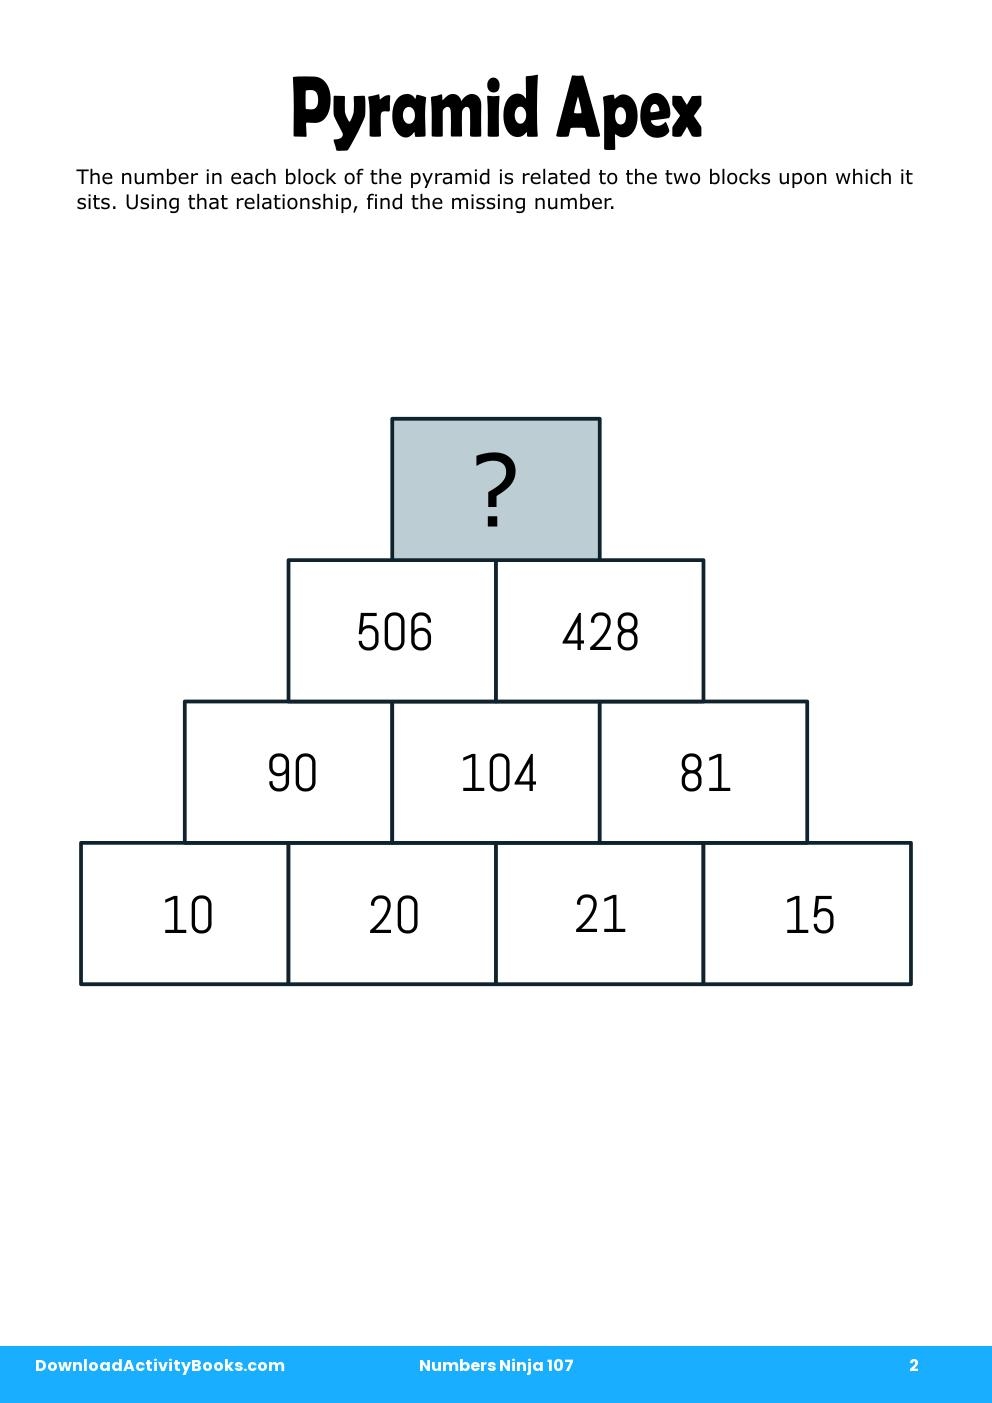 Pyramid Apex in Numbers Ninja 107